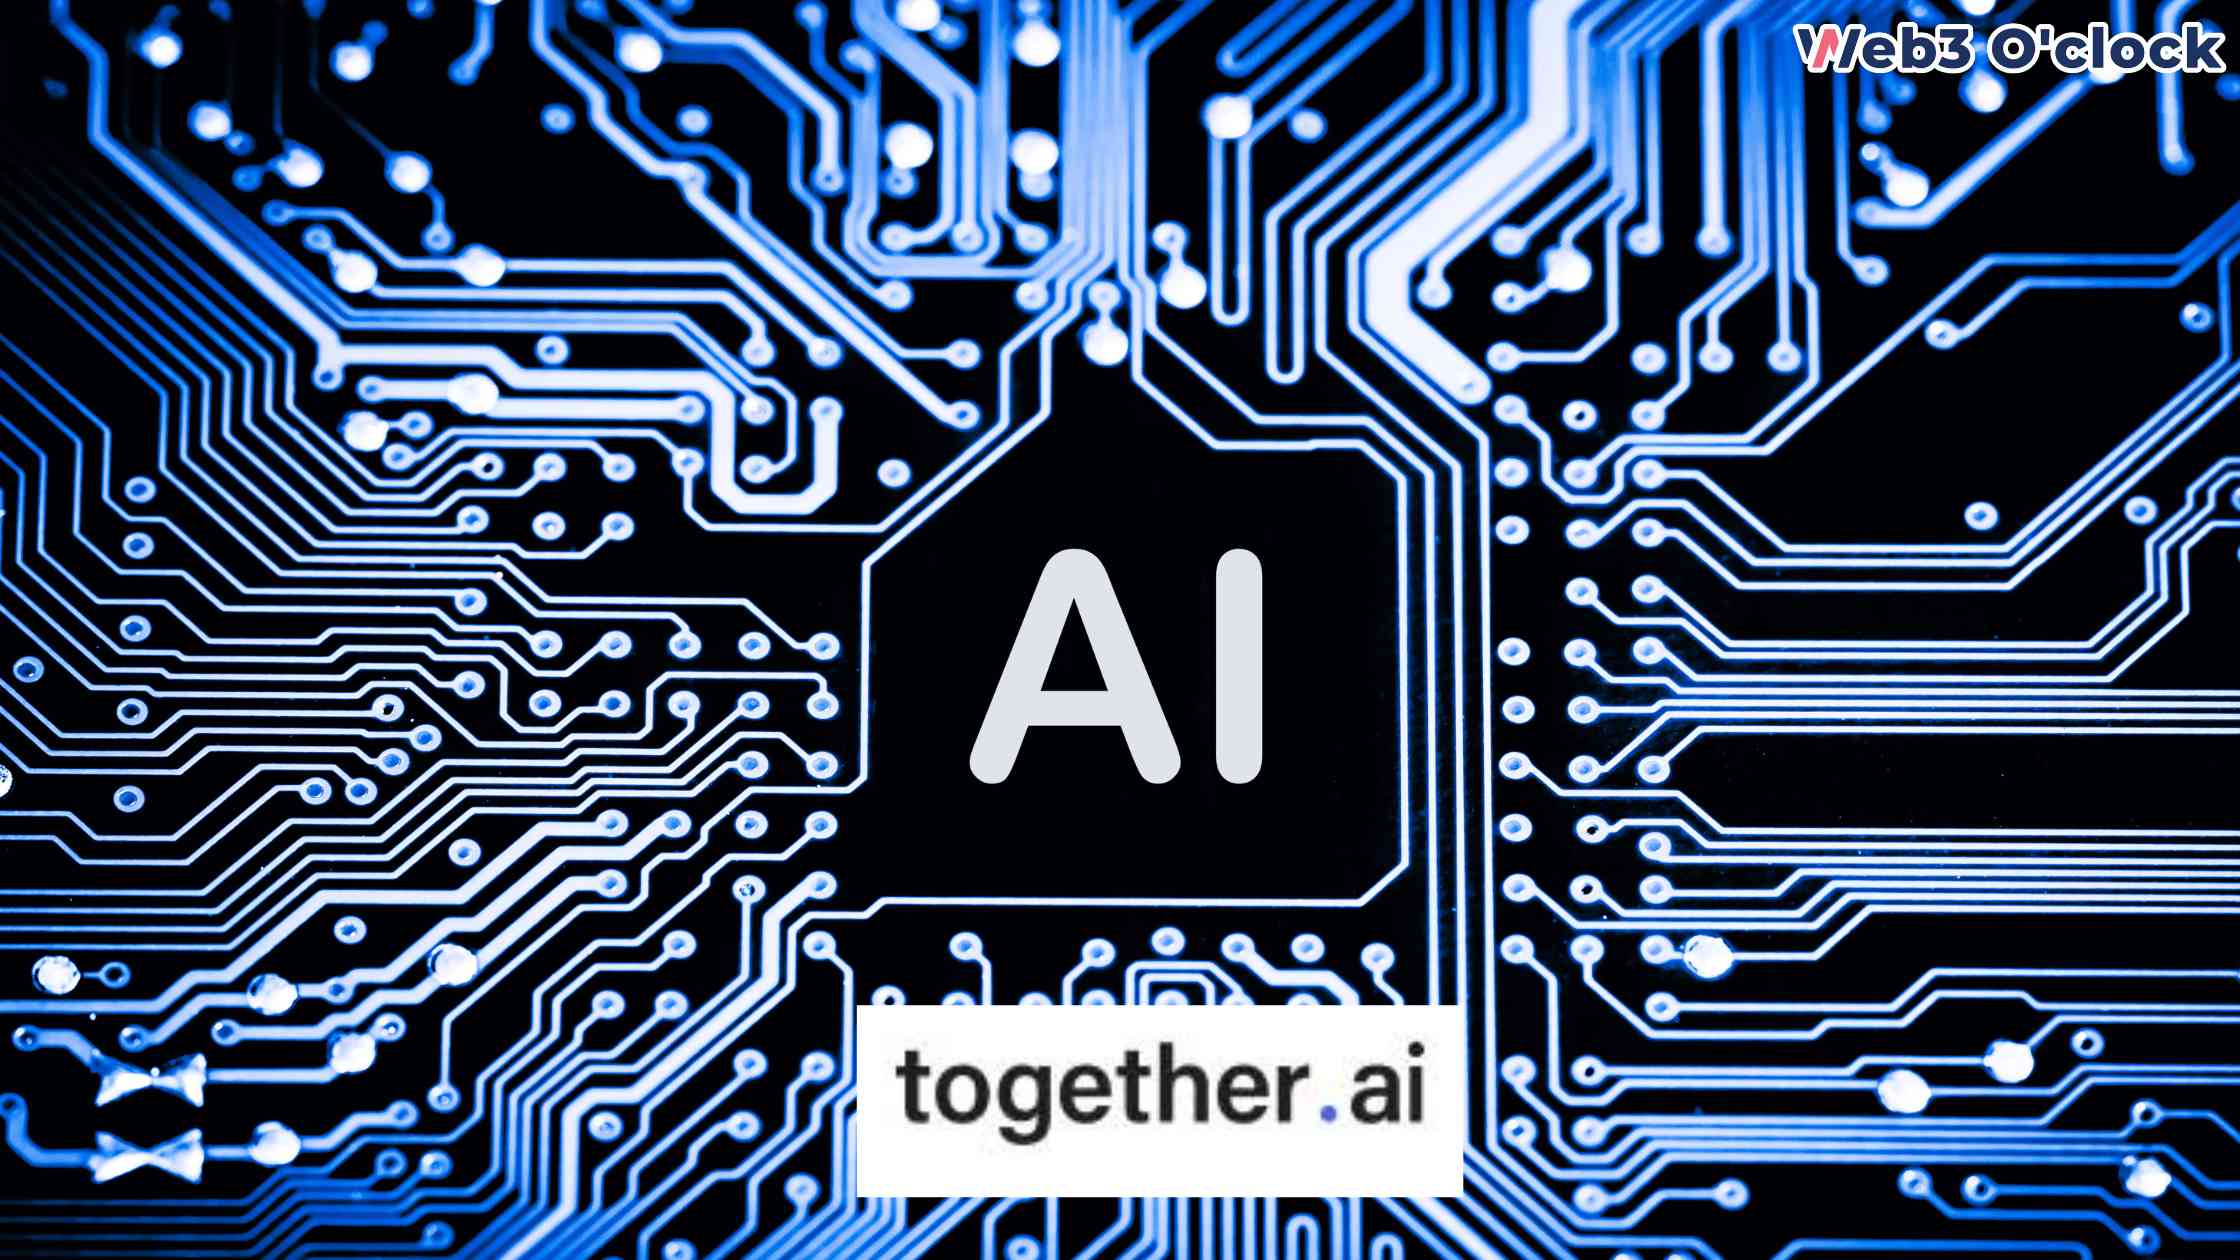 Together AI Raises Funding by Web3 O'clock